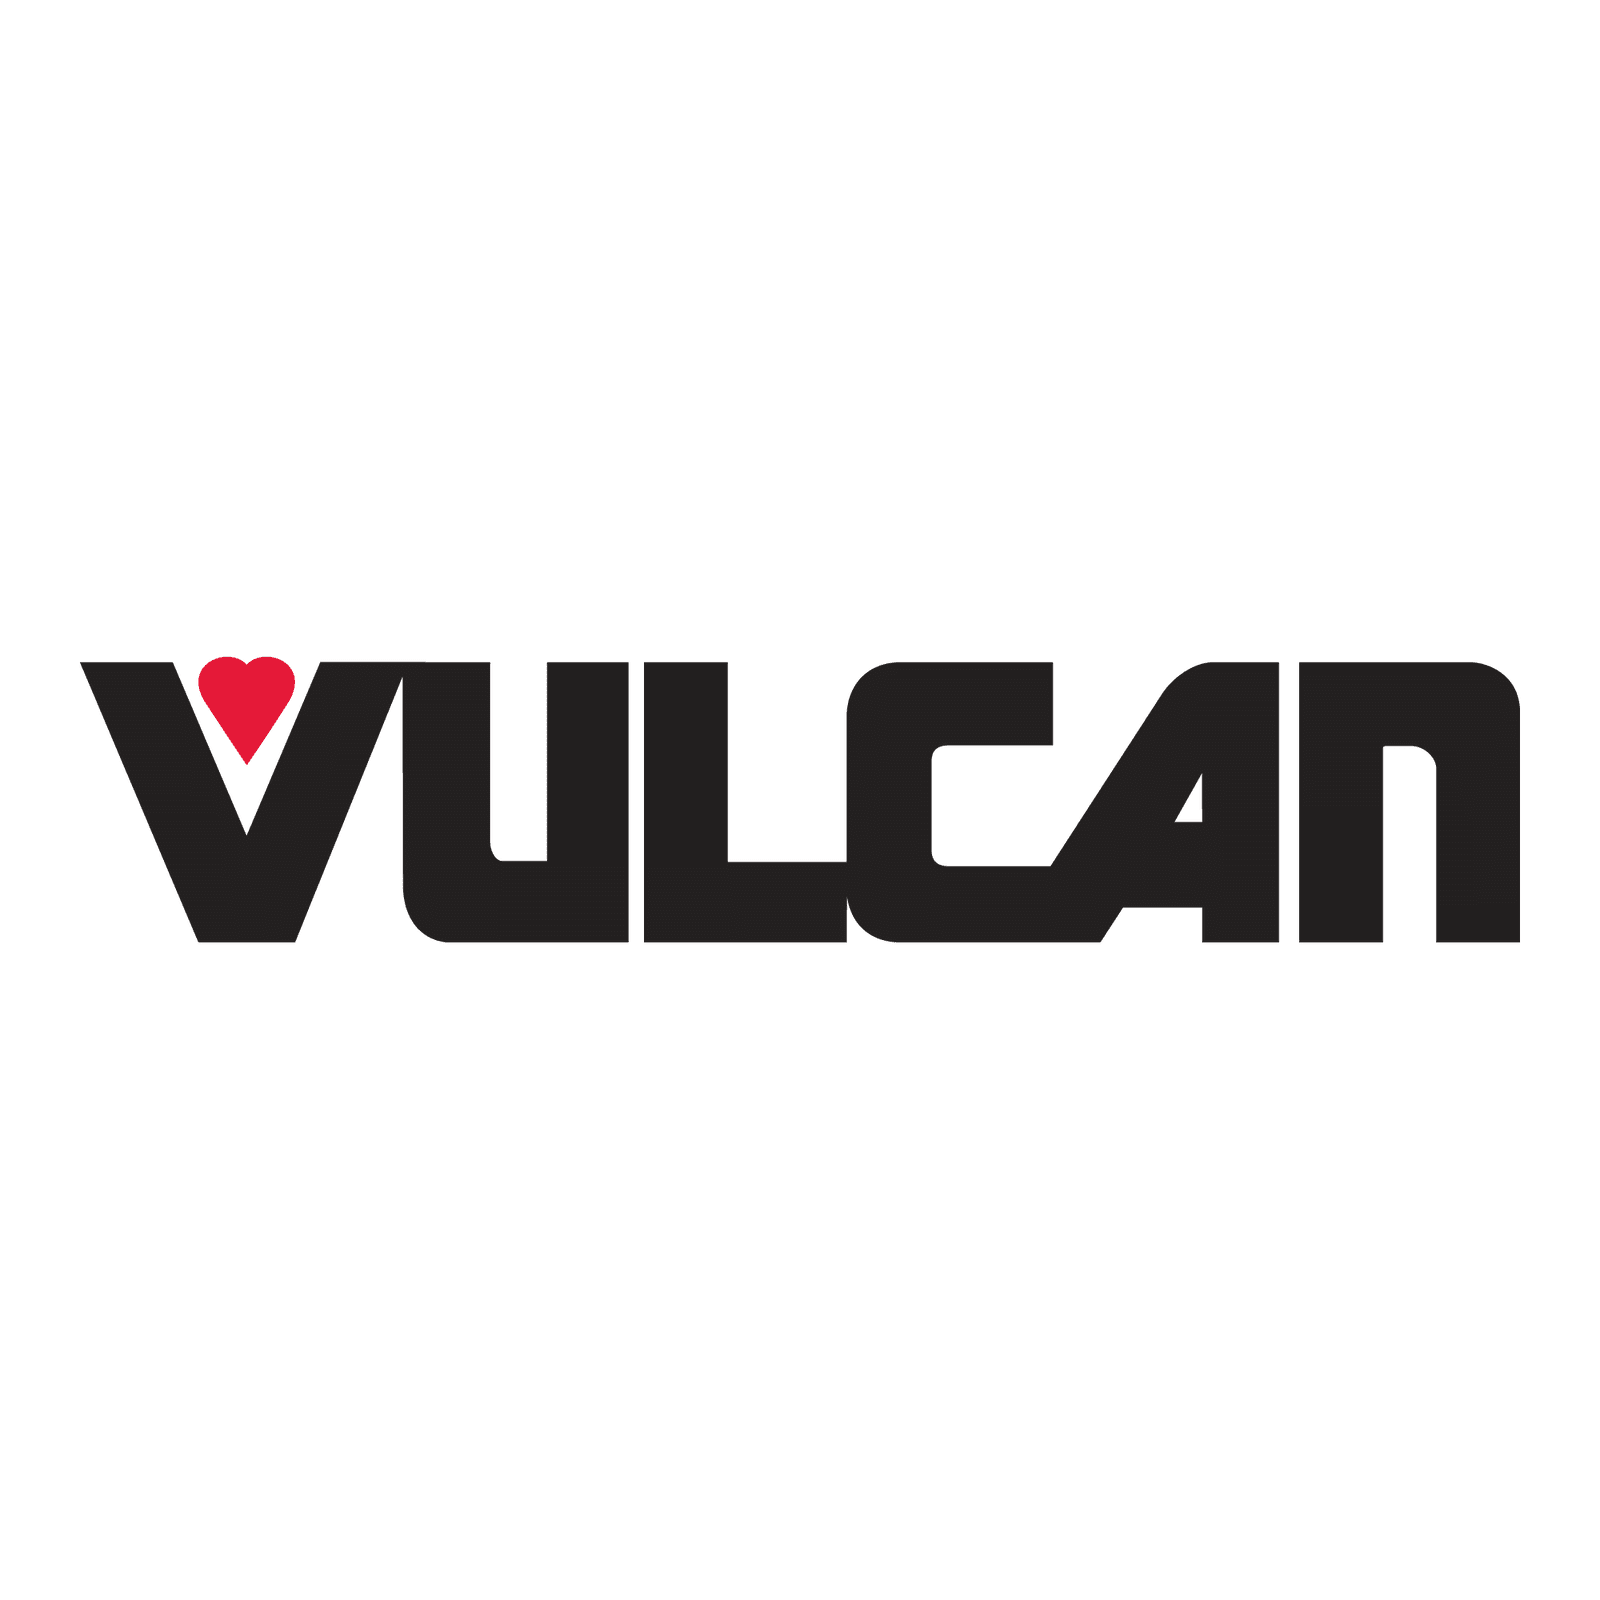 Vulcan Mediterranean Restaurant Equipment